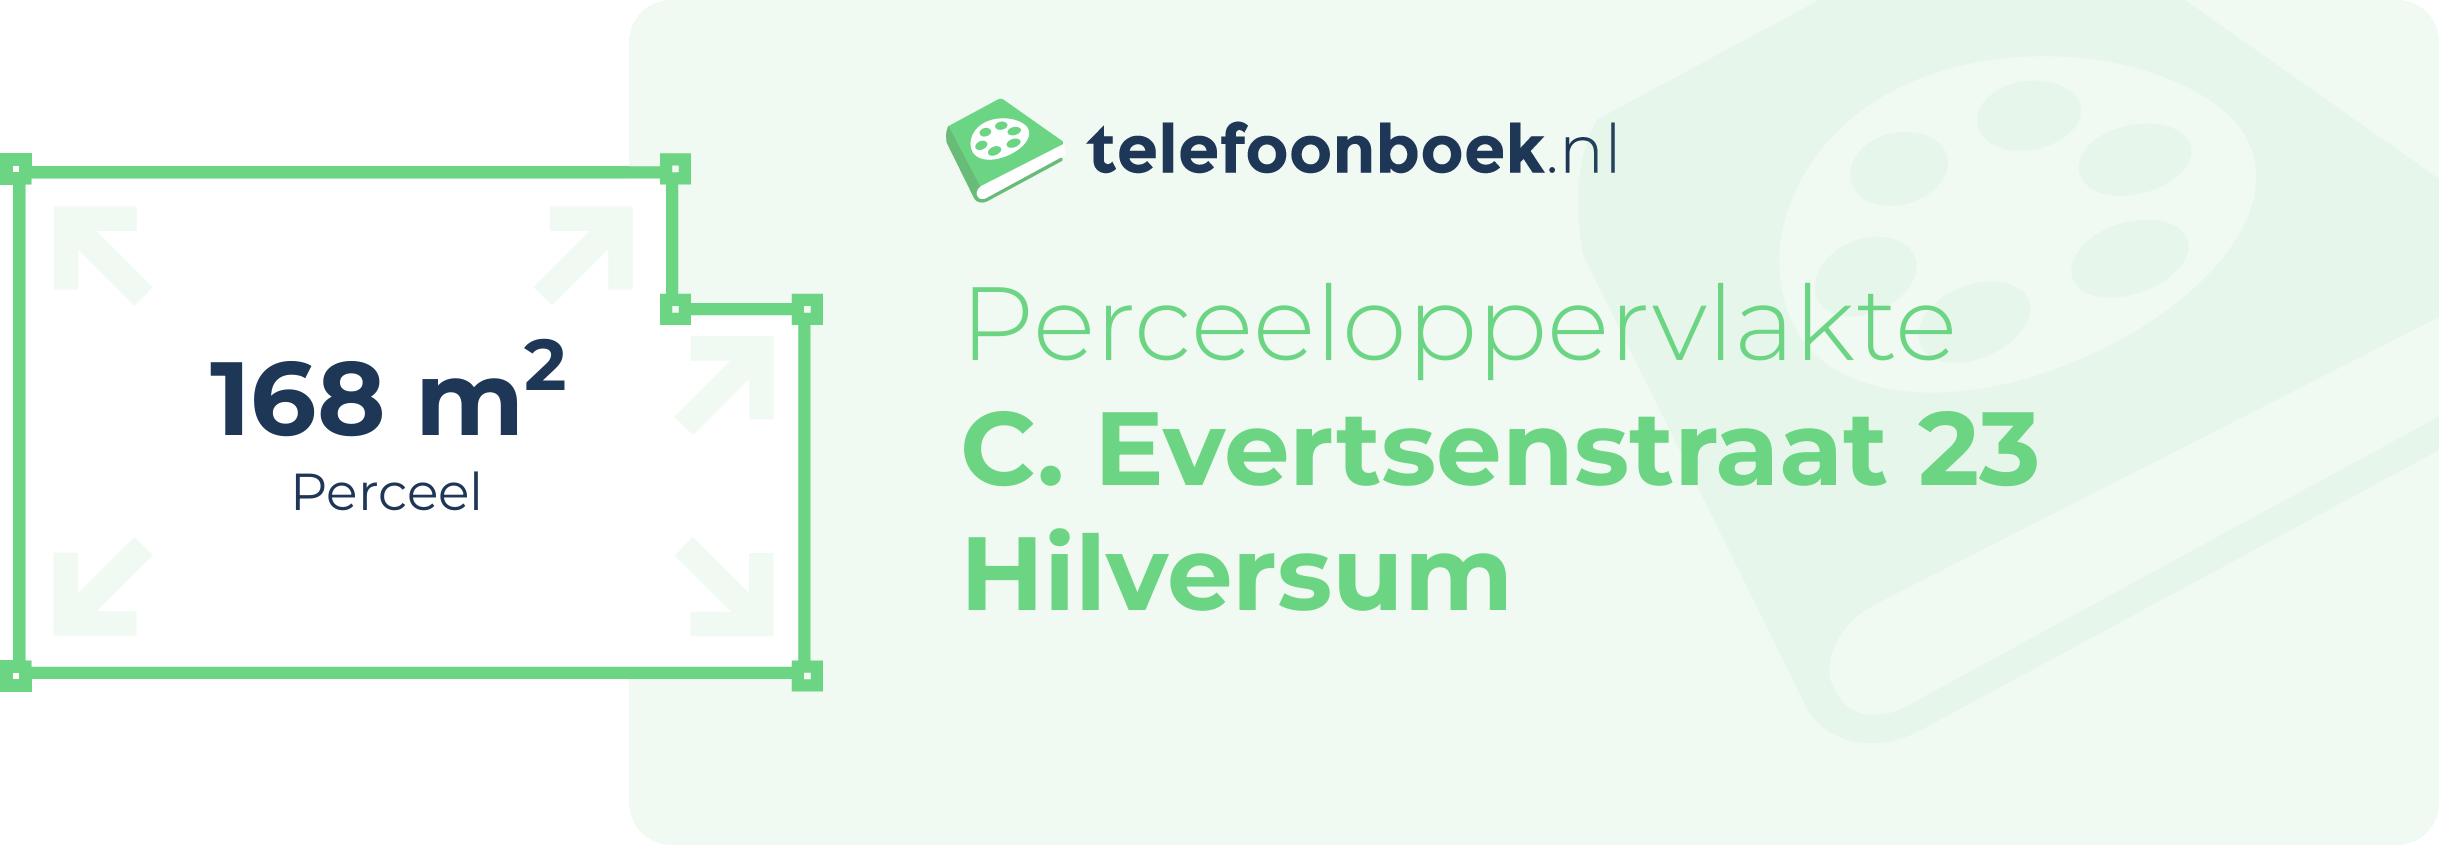 Perceeloppervlakte C. Evertsenstraat 23 Hilversum